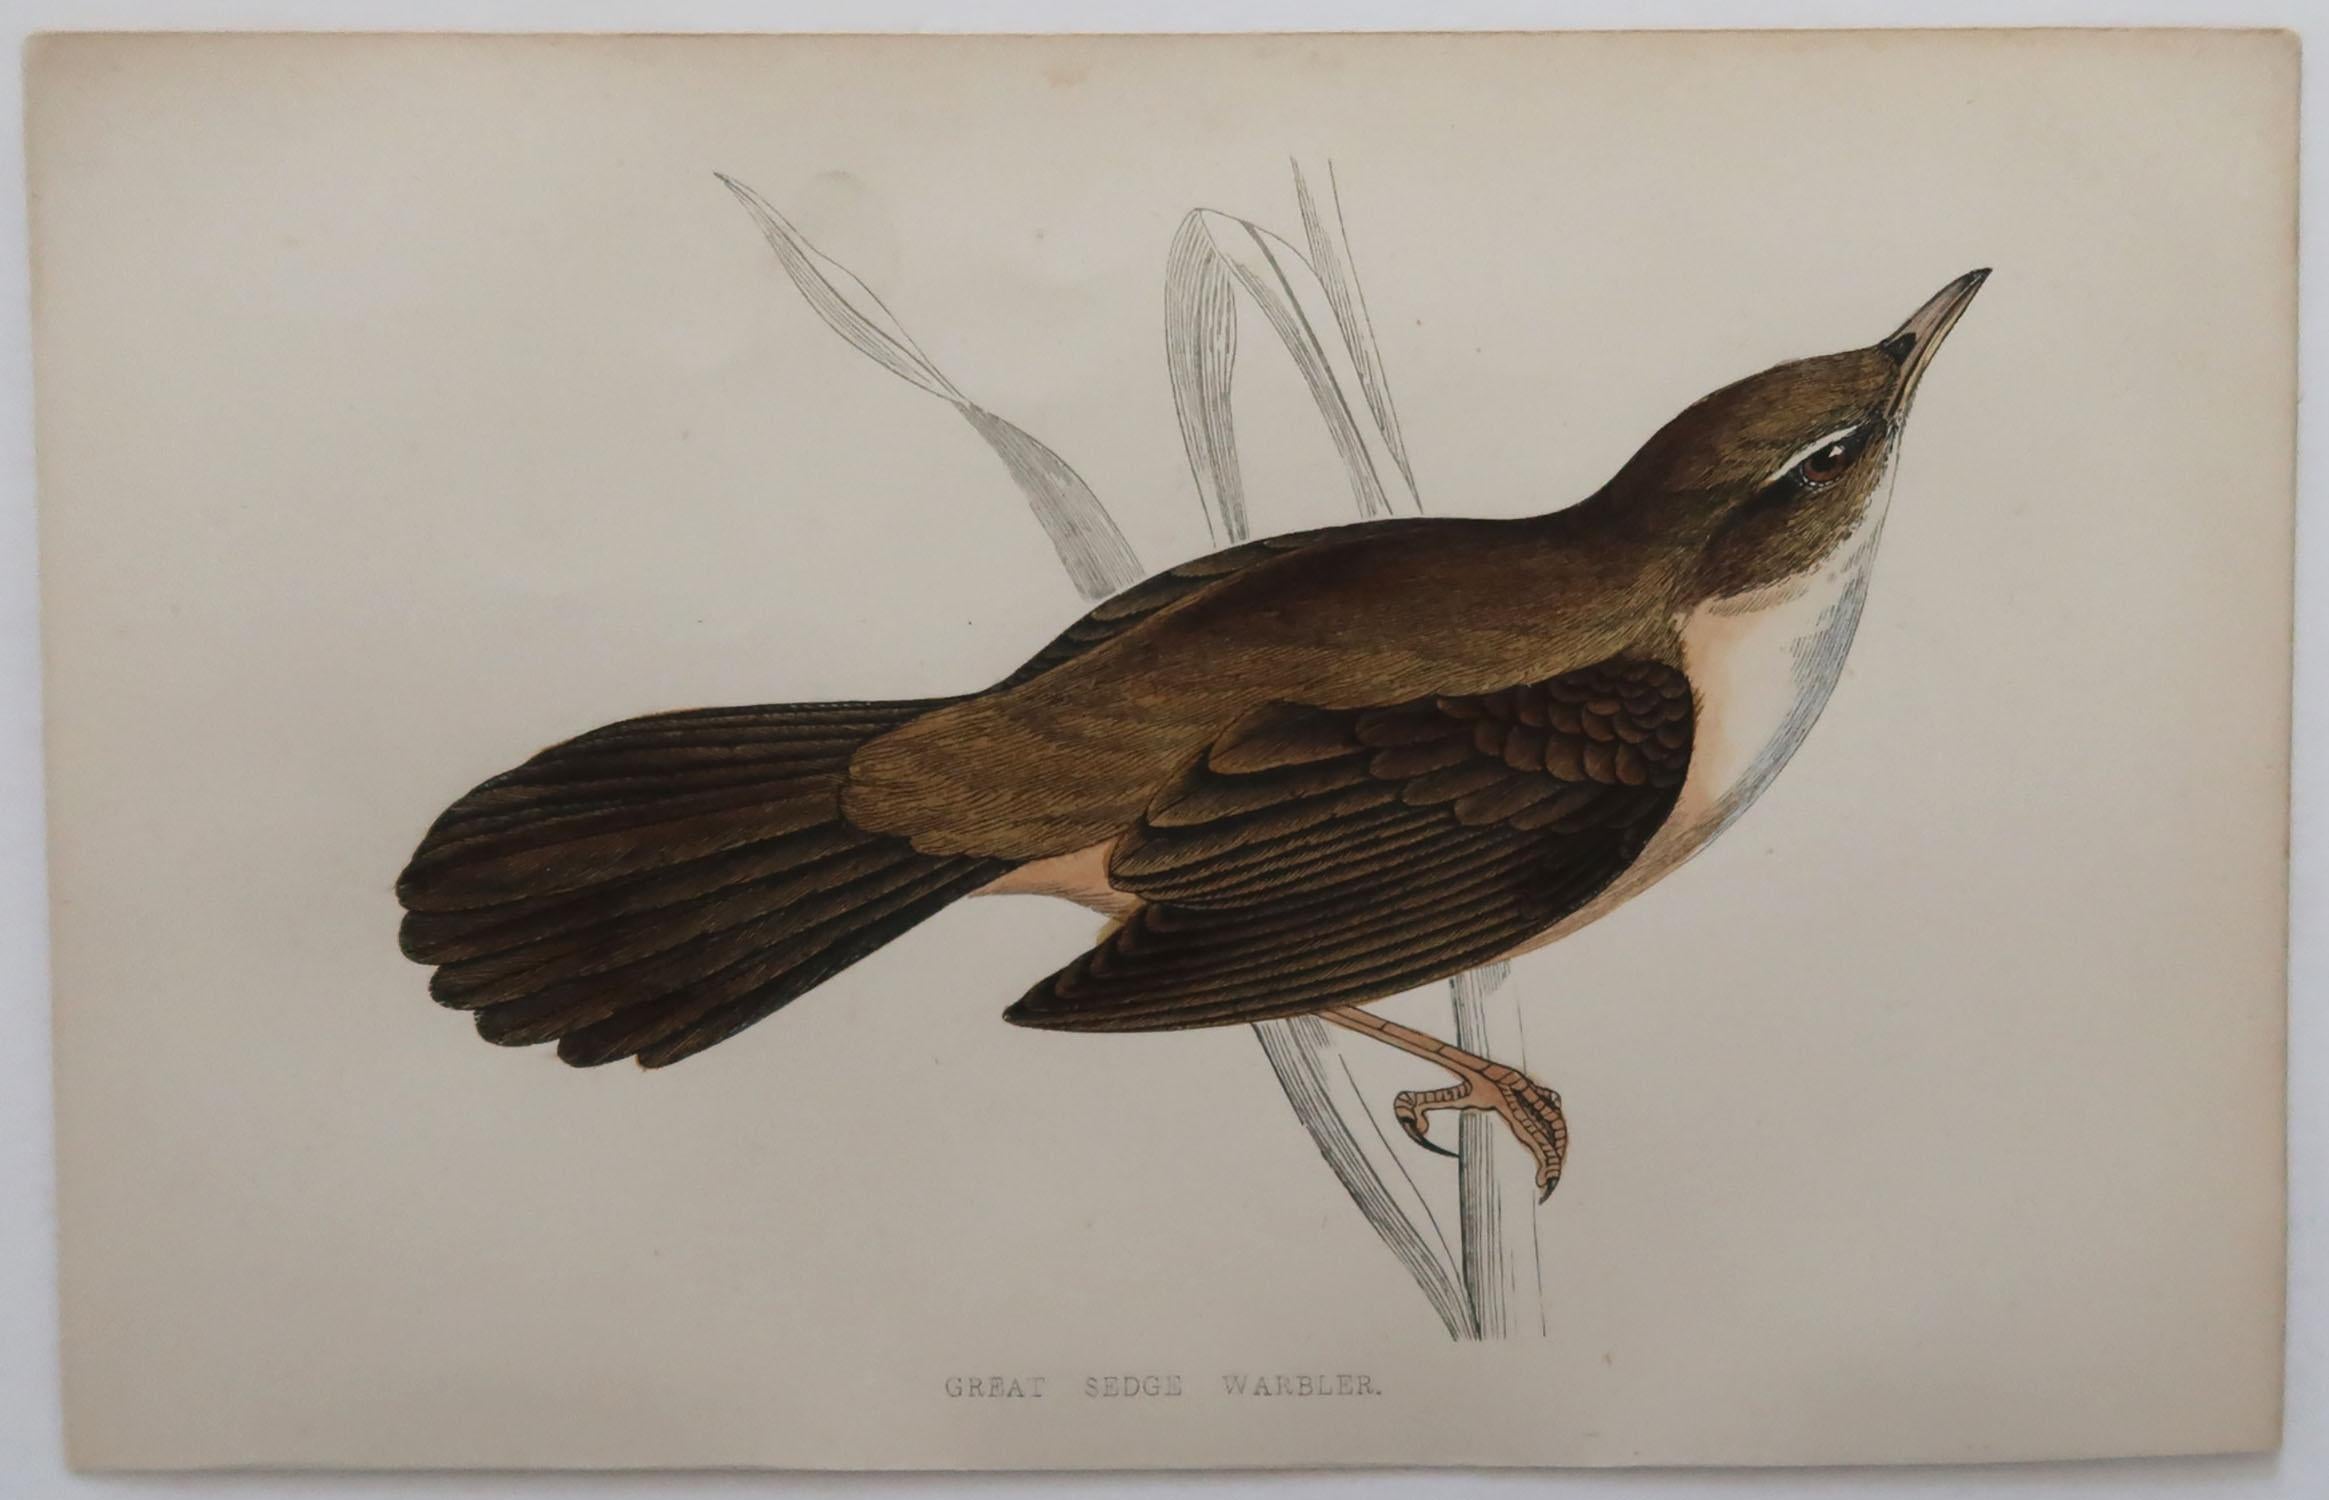 Folk Art Original Antique Bird Print, the Great Sedge Warbler, circa 1870